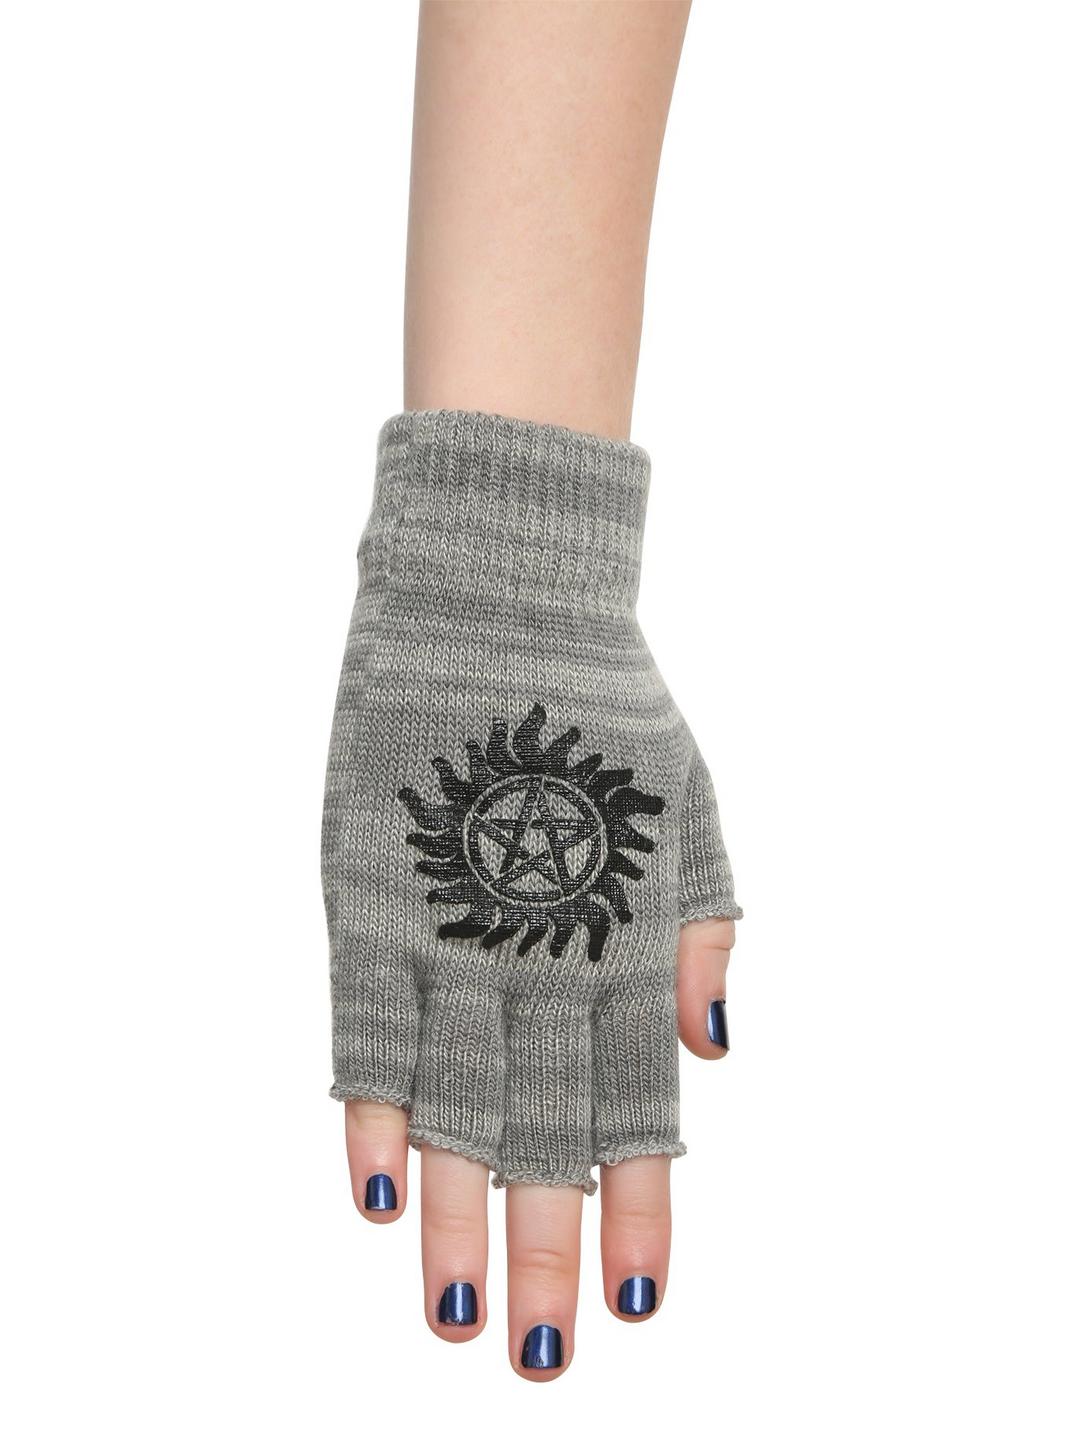 Supernatural Anti-Possession Fingerless Gloves, , hi-res